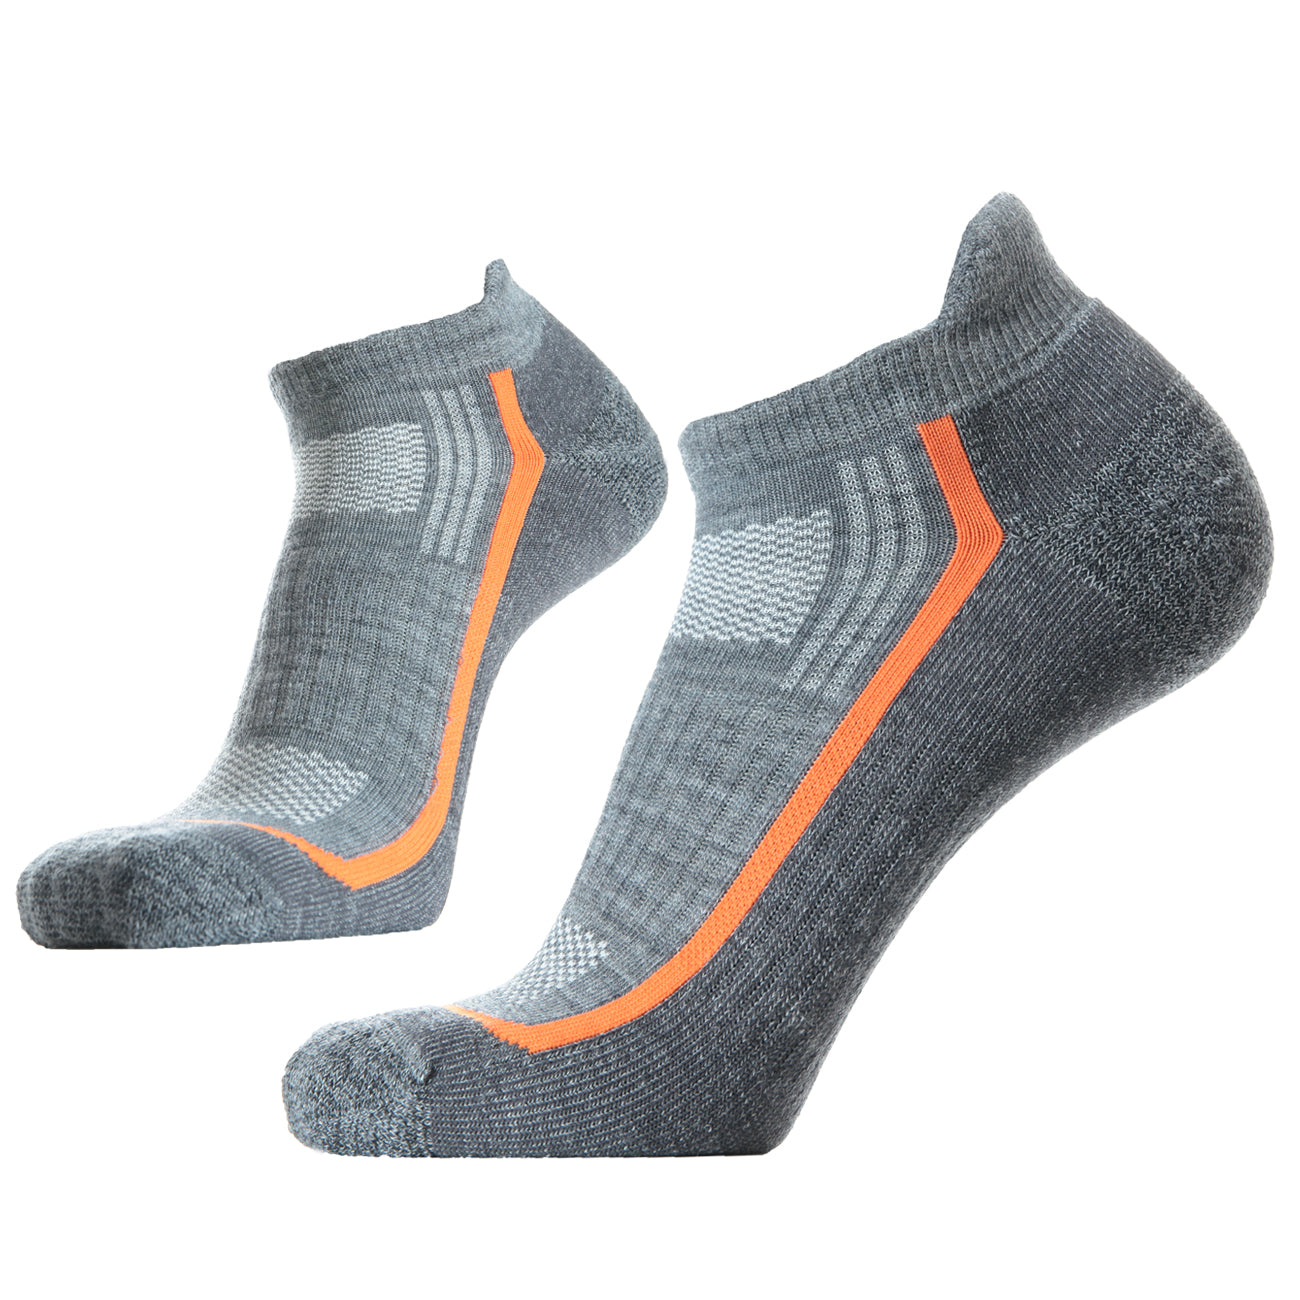 SOLAX 3 pairs Man's Merino wool No Show socks